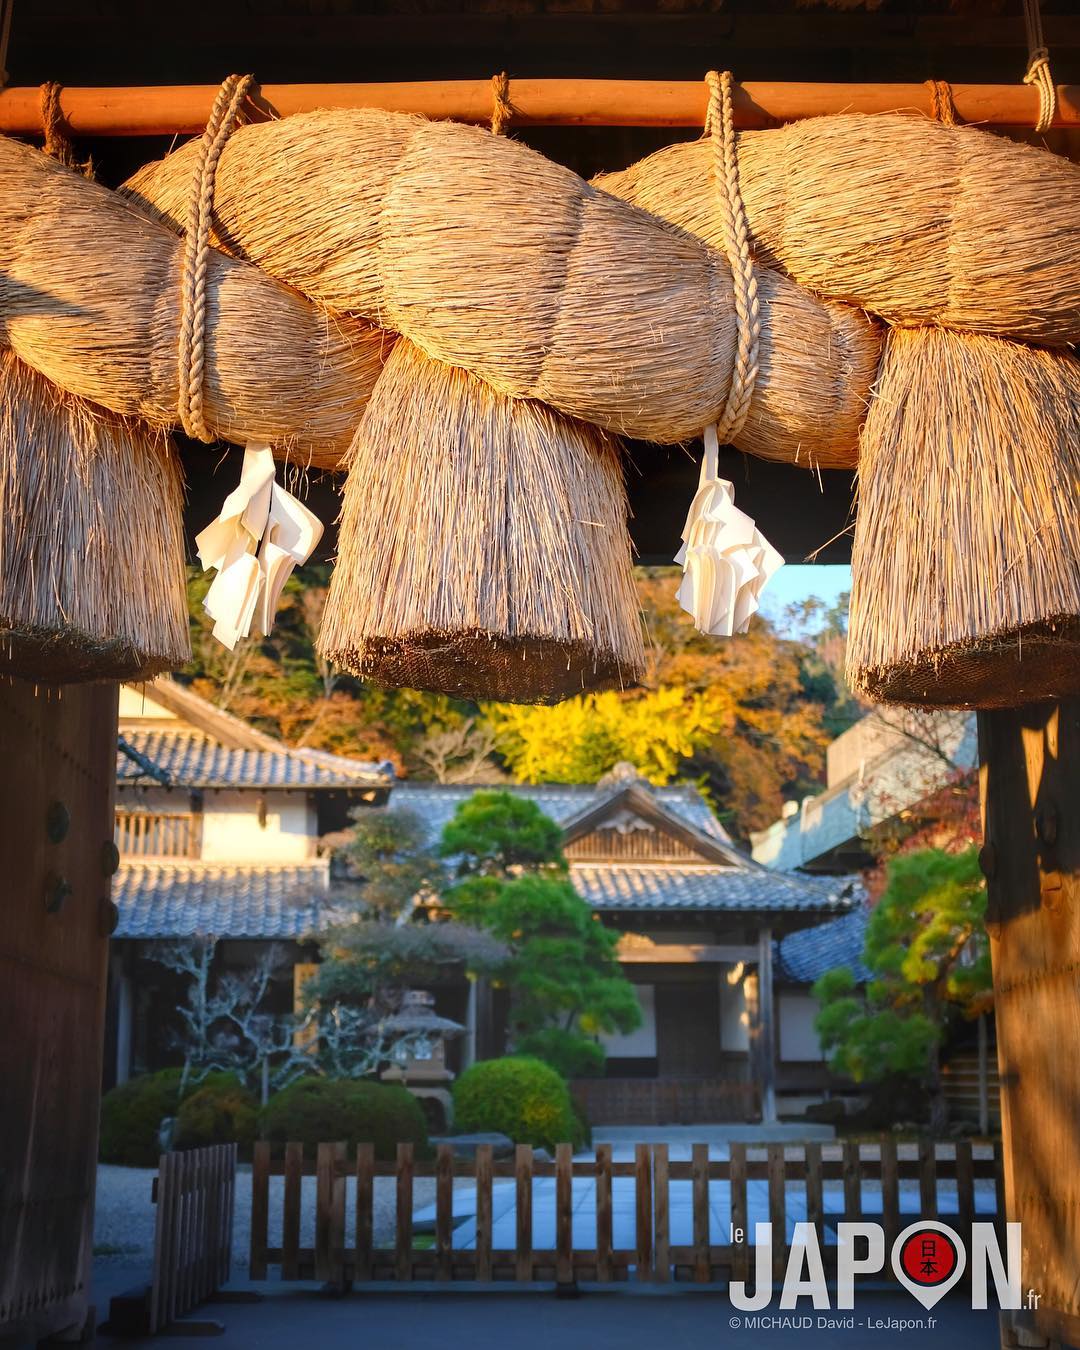 Derrière la porte du sanctuaire Izumo Taisha ! ⛩😲 #IzumoAdventures #Izumo #fujix100f